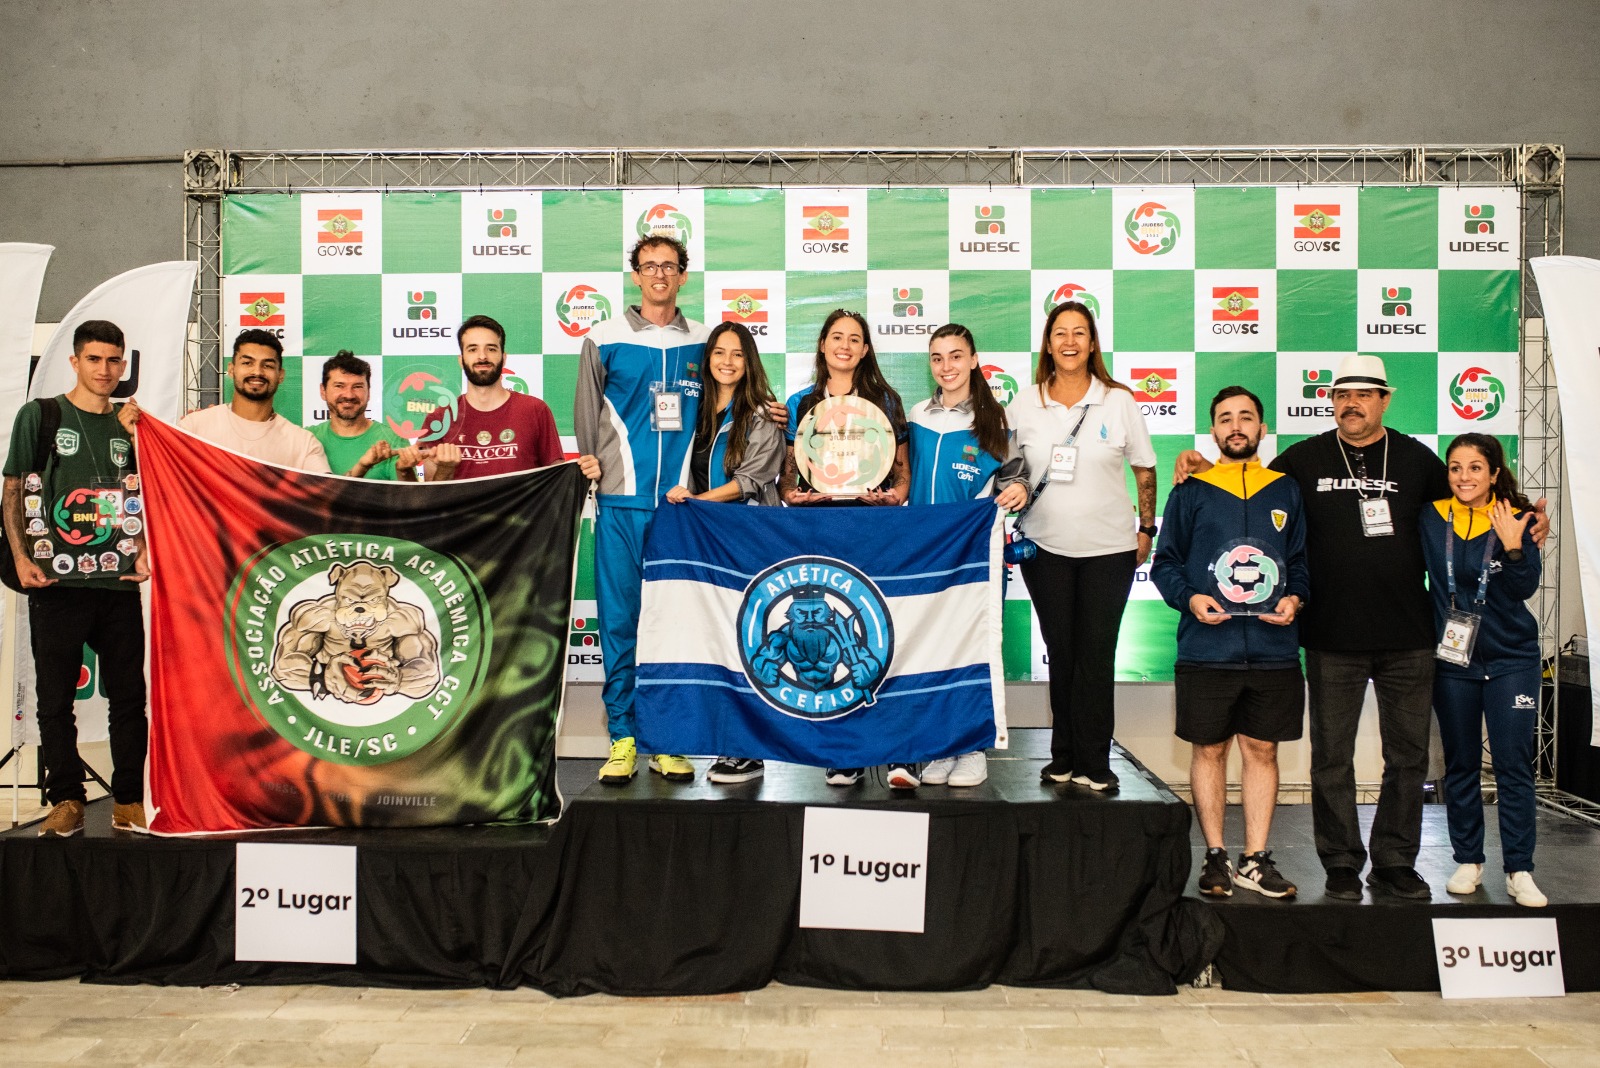 Notícia - Núcleo de Xadrez da Udesc Joinville promove torneio no Shopping  Garten neste sábado